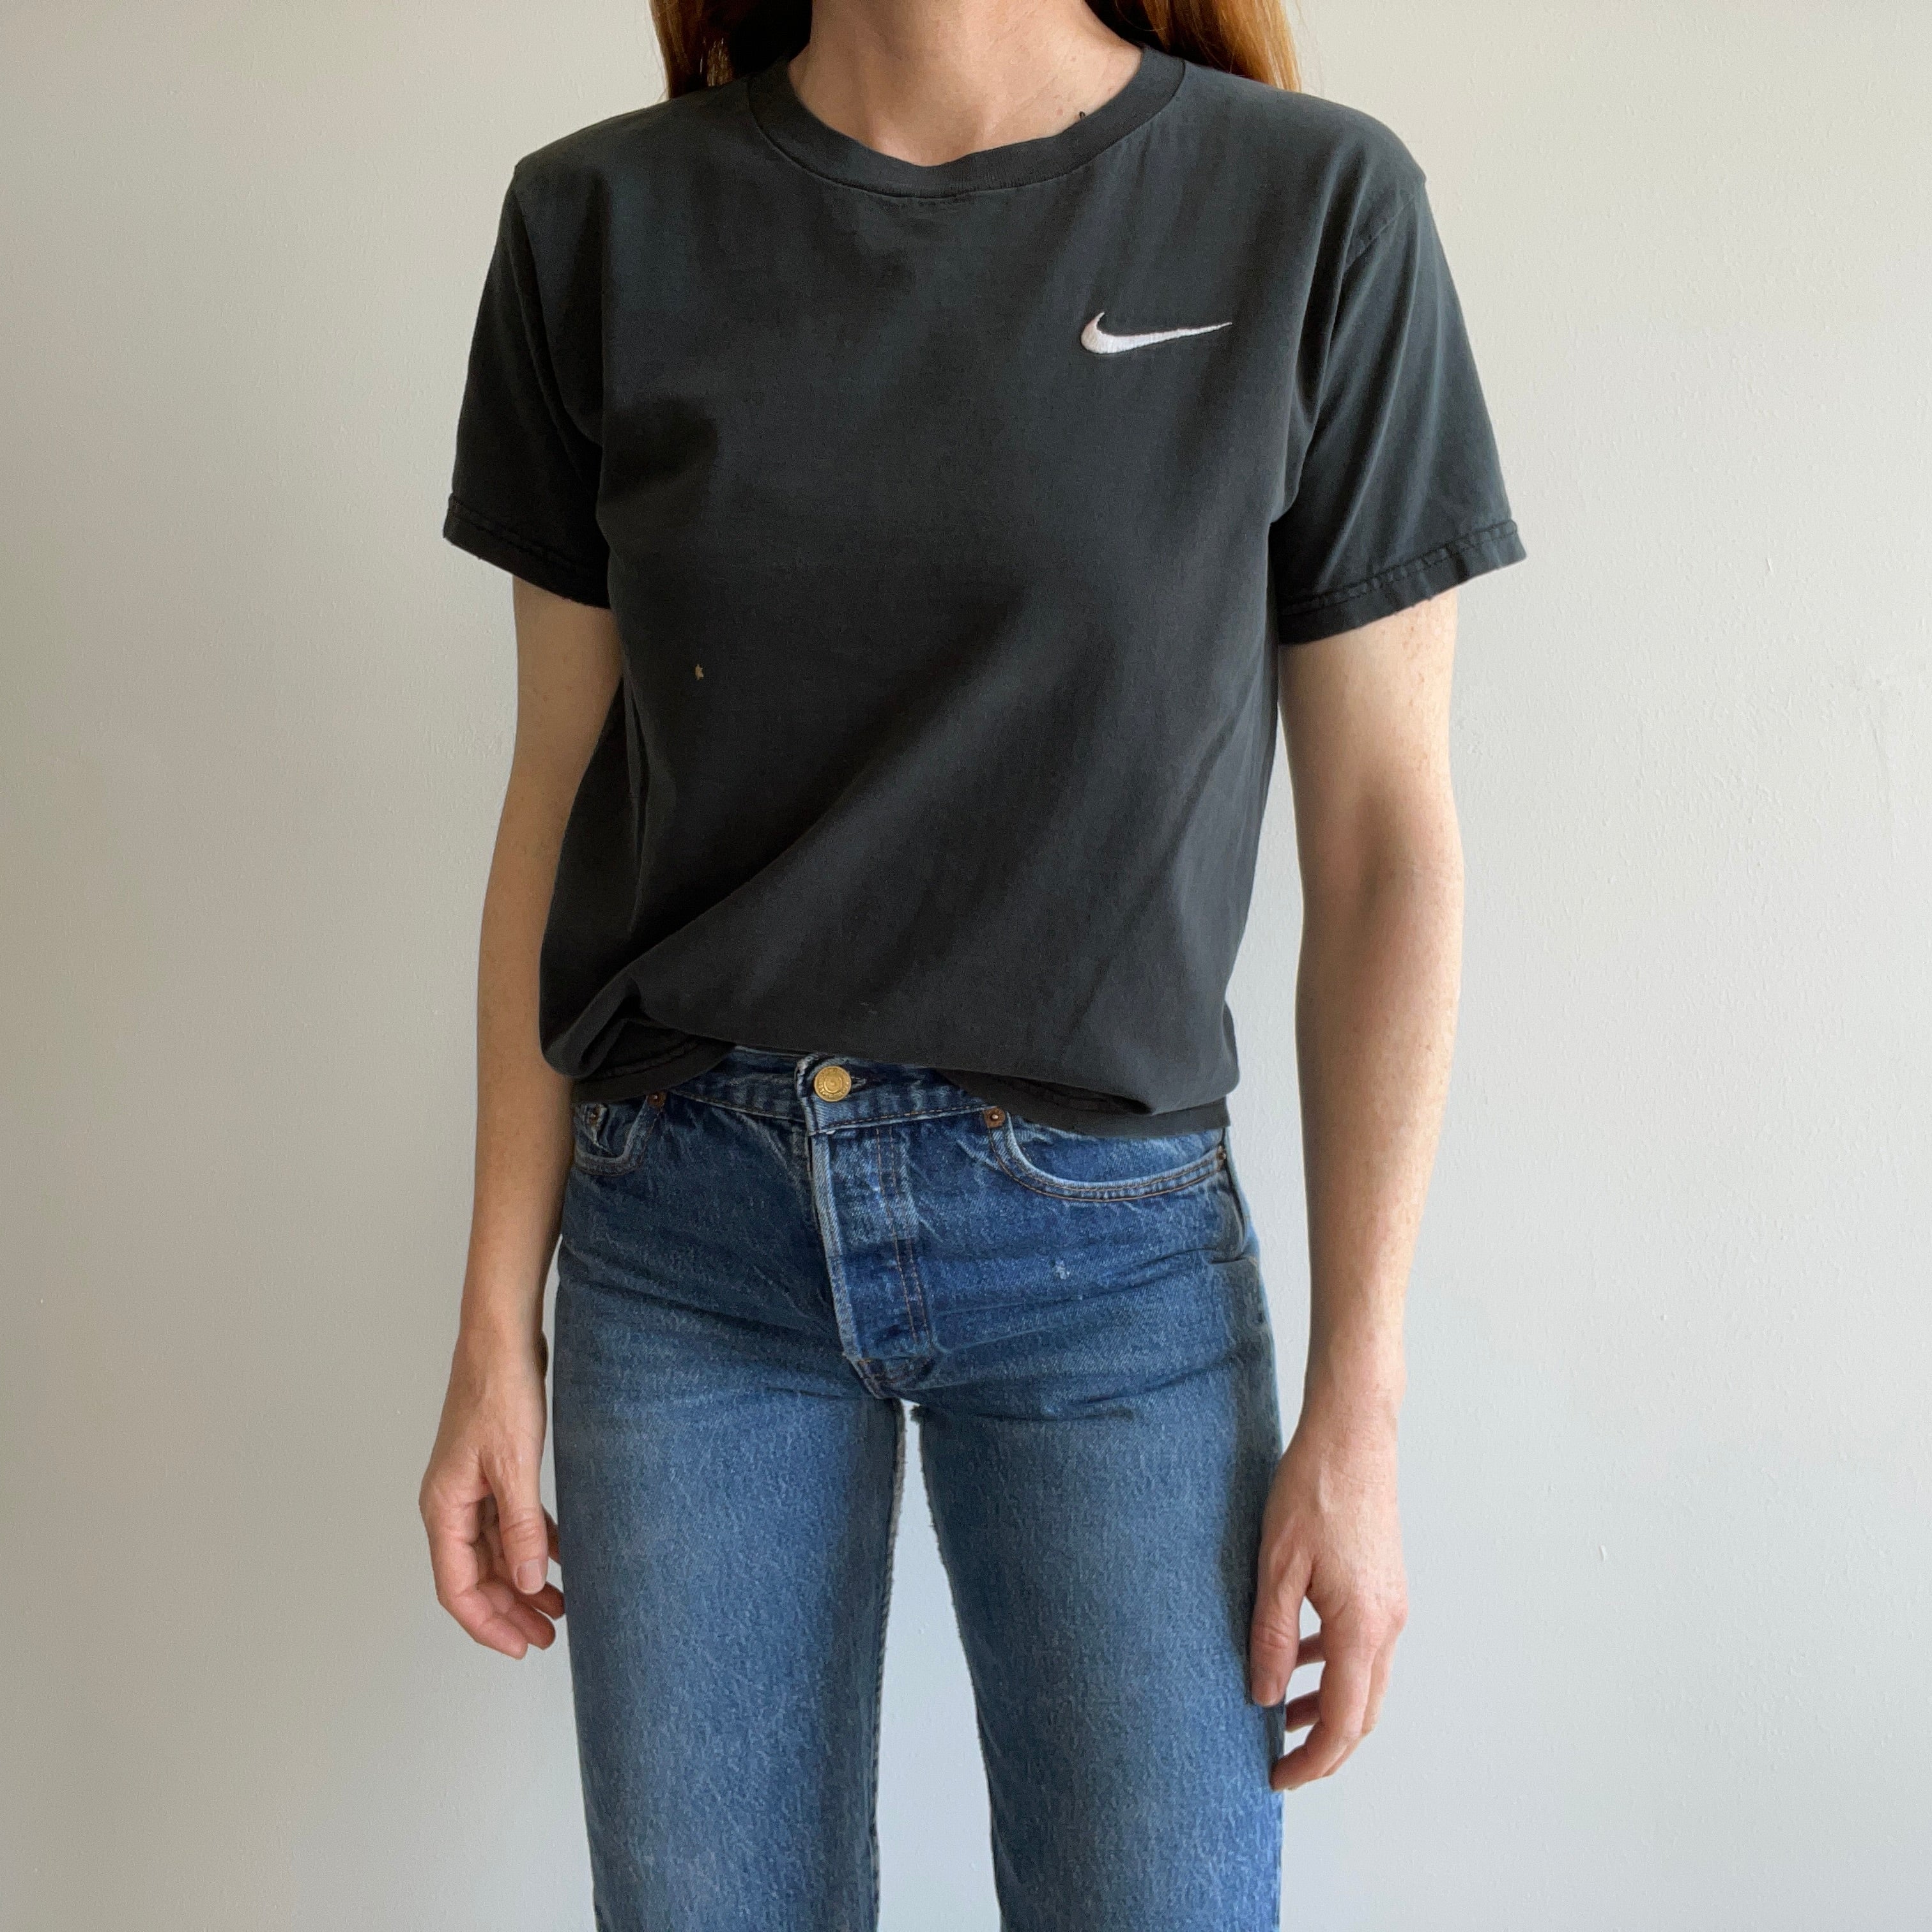 1990s USA Made Nike T-Shirt